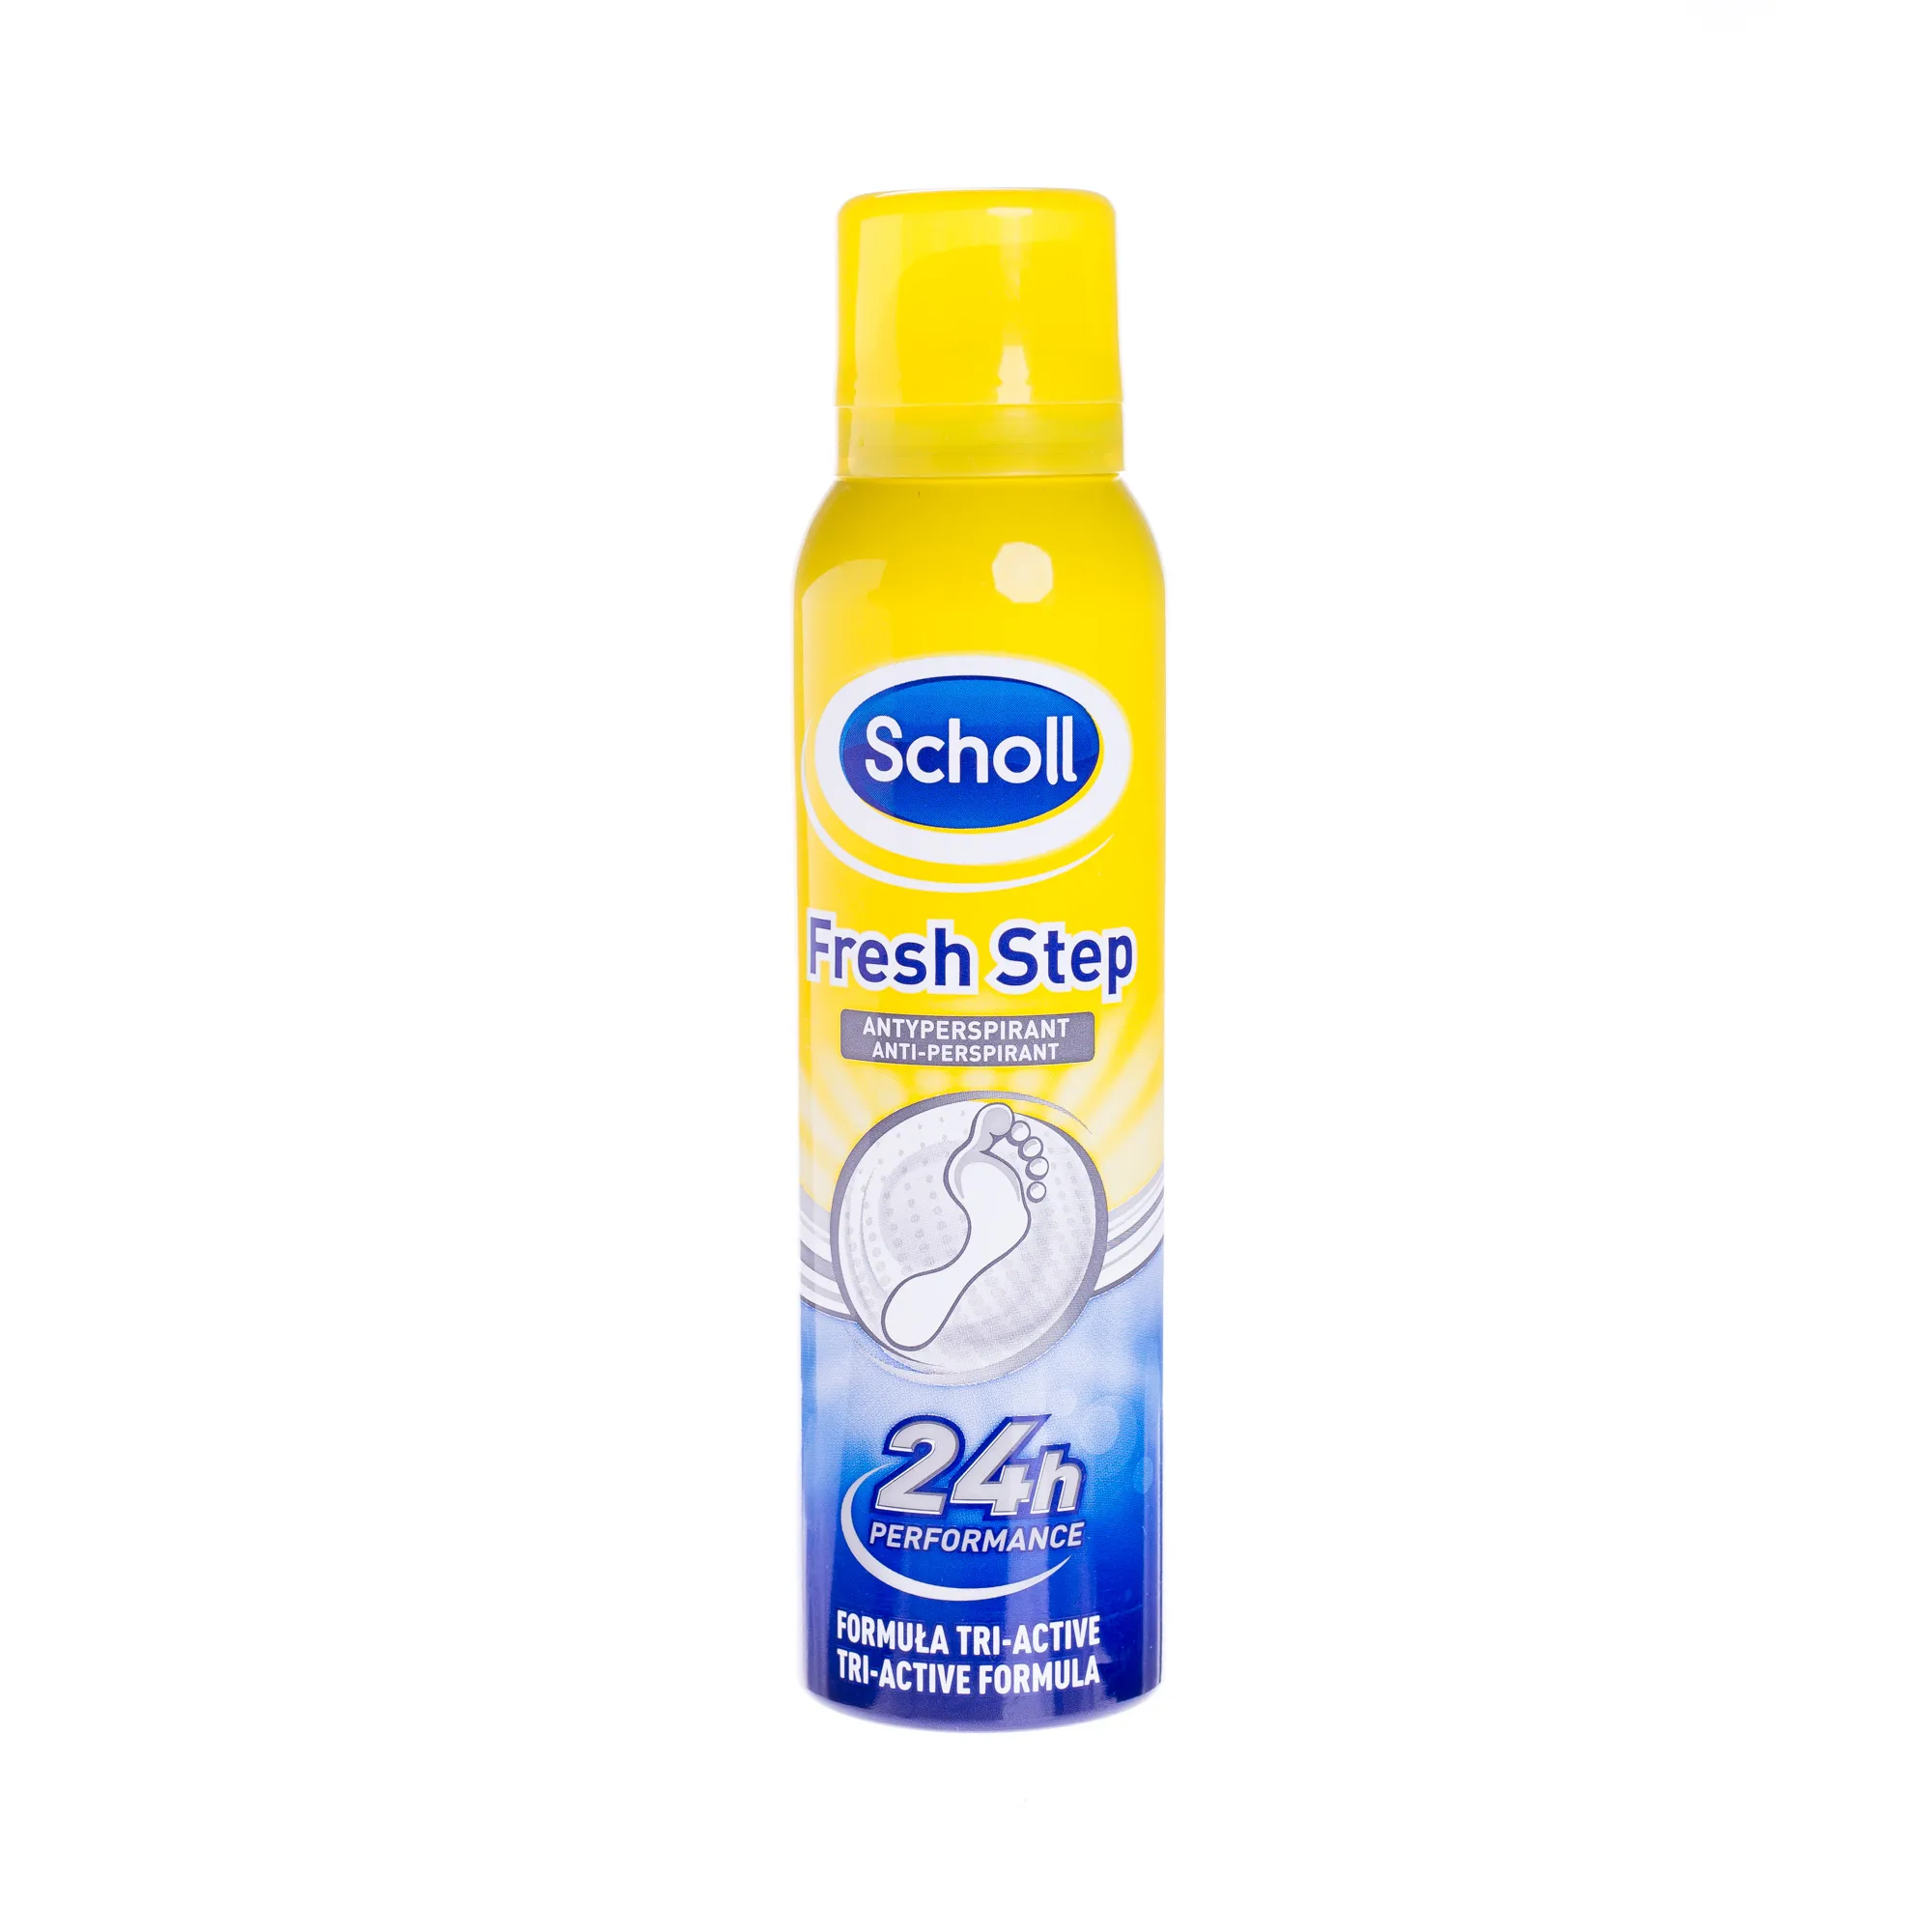 Scholl, fresh step, antyperspirant, 24h, 150 ml 